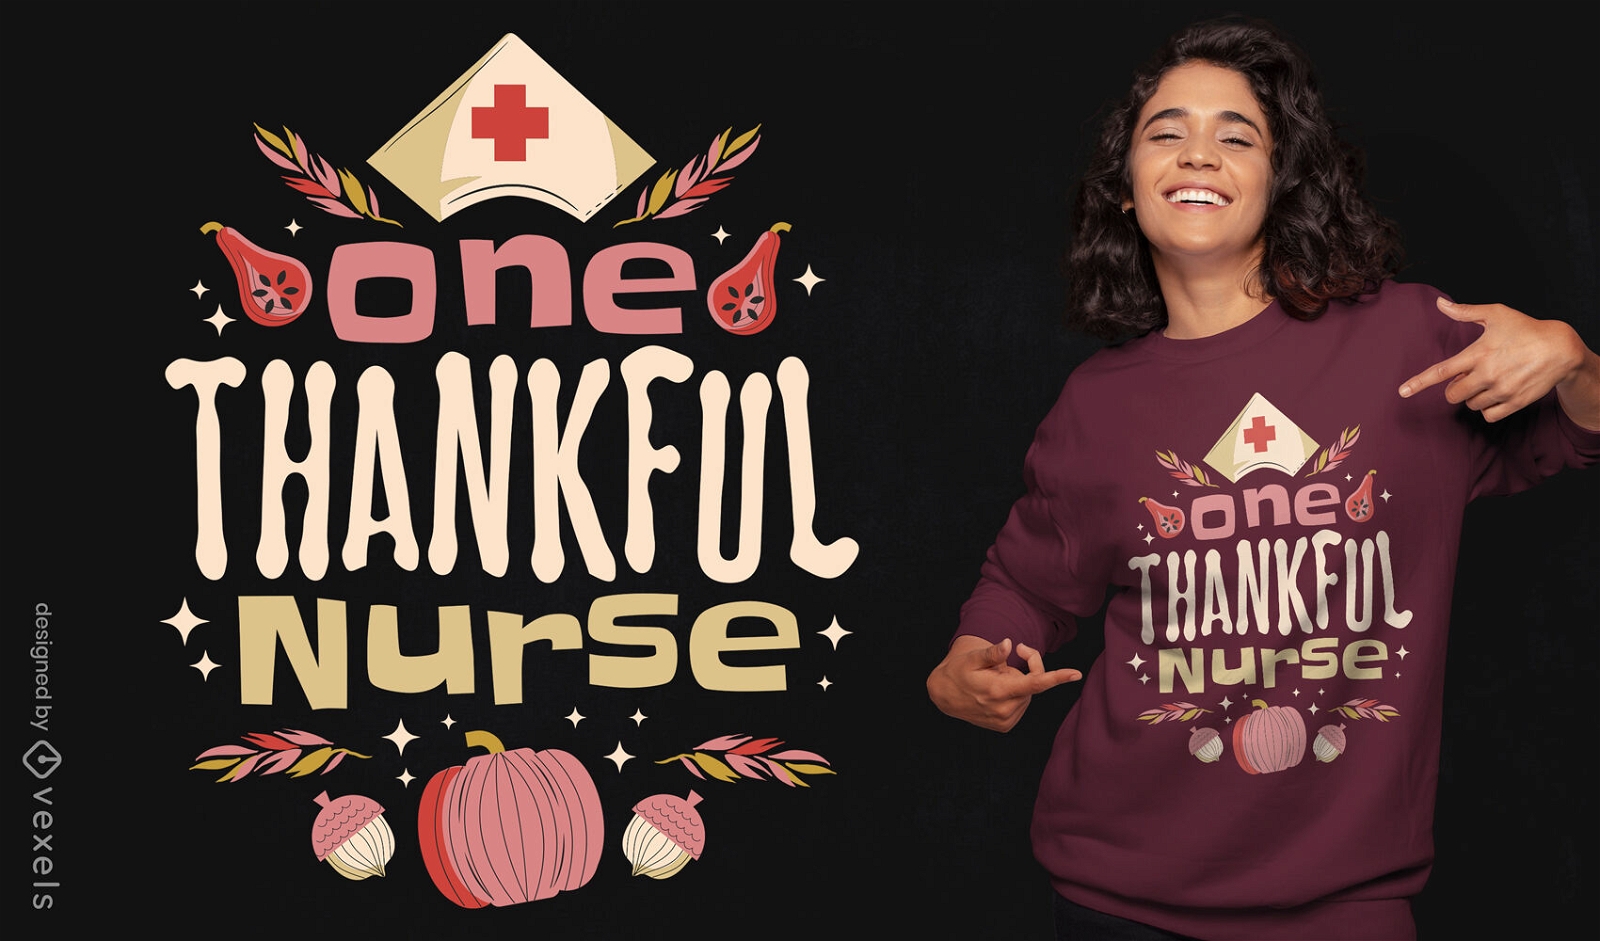 Thanksgiving nurse quote t-shirt design